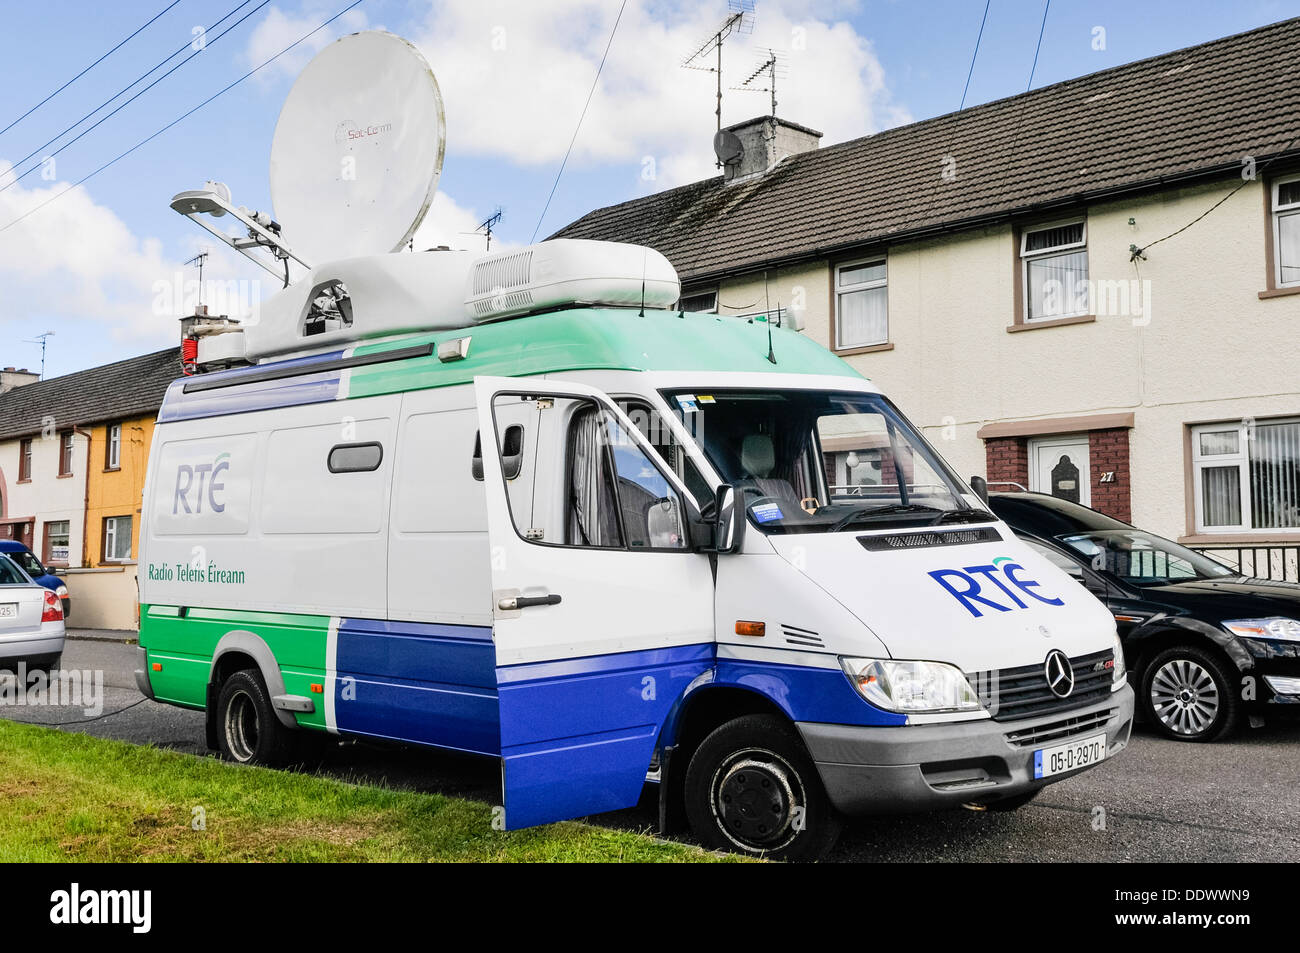 RTE outside broadcast van with satellite dish Stock Photo